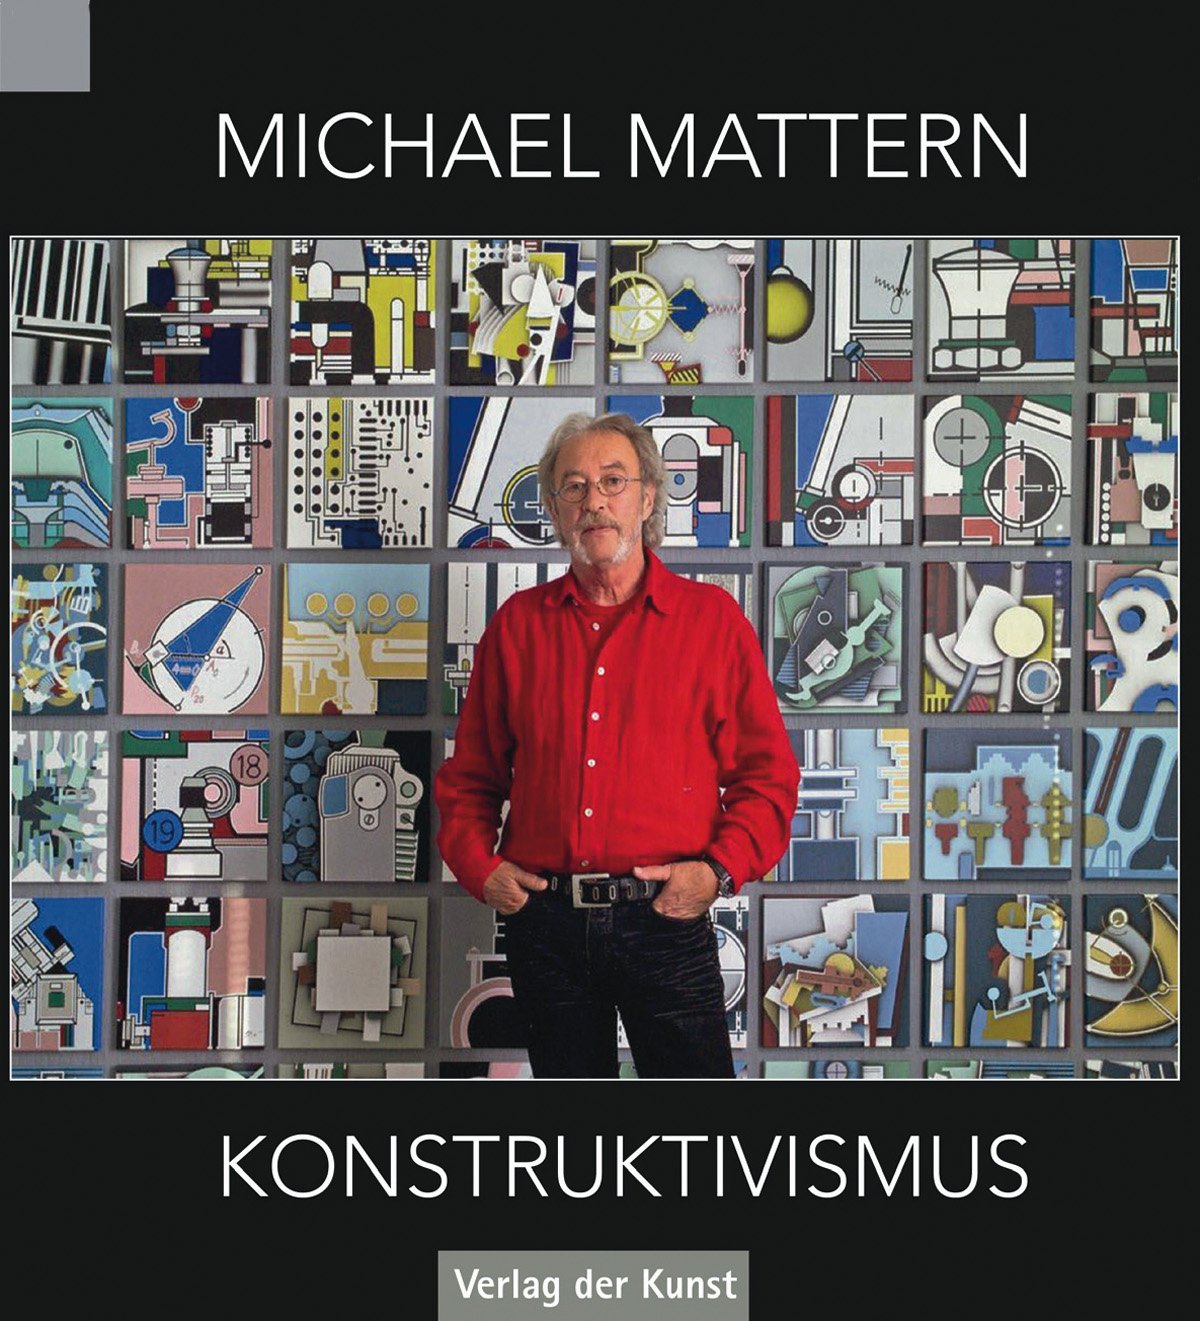 Michael Mattern. Konstruktivismus? Matternismus!, Bild: Husum: Verlag der Kunst, 2019..